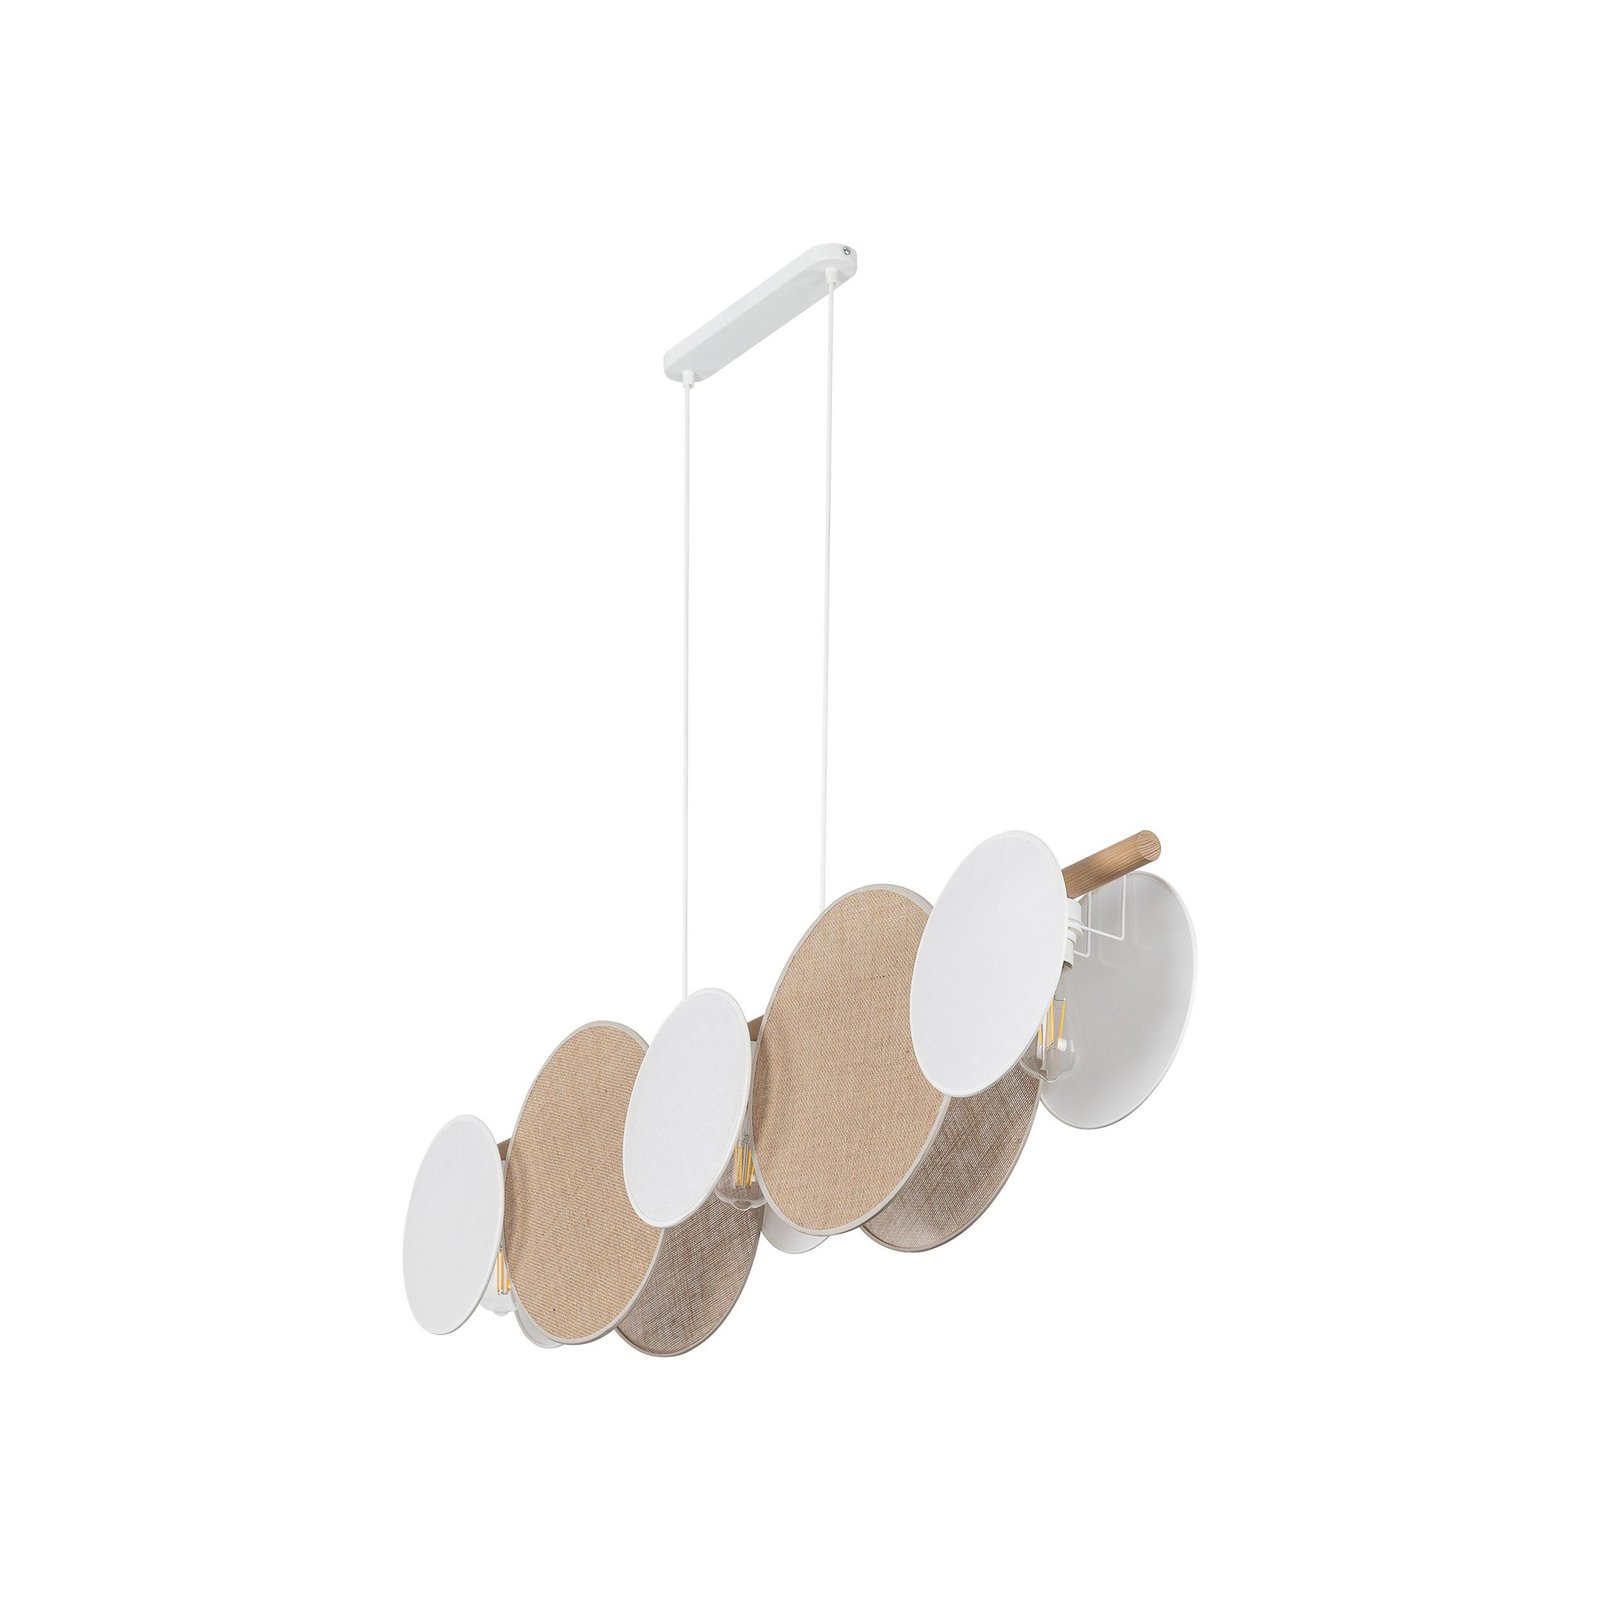 Puls hanging light, jute shades, natural brown/white, 5-bulb